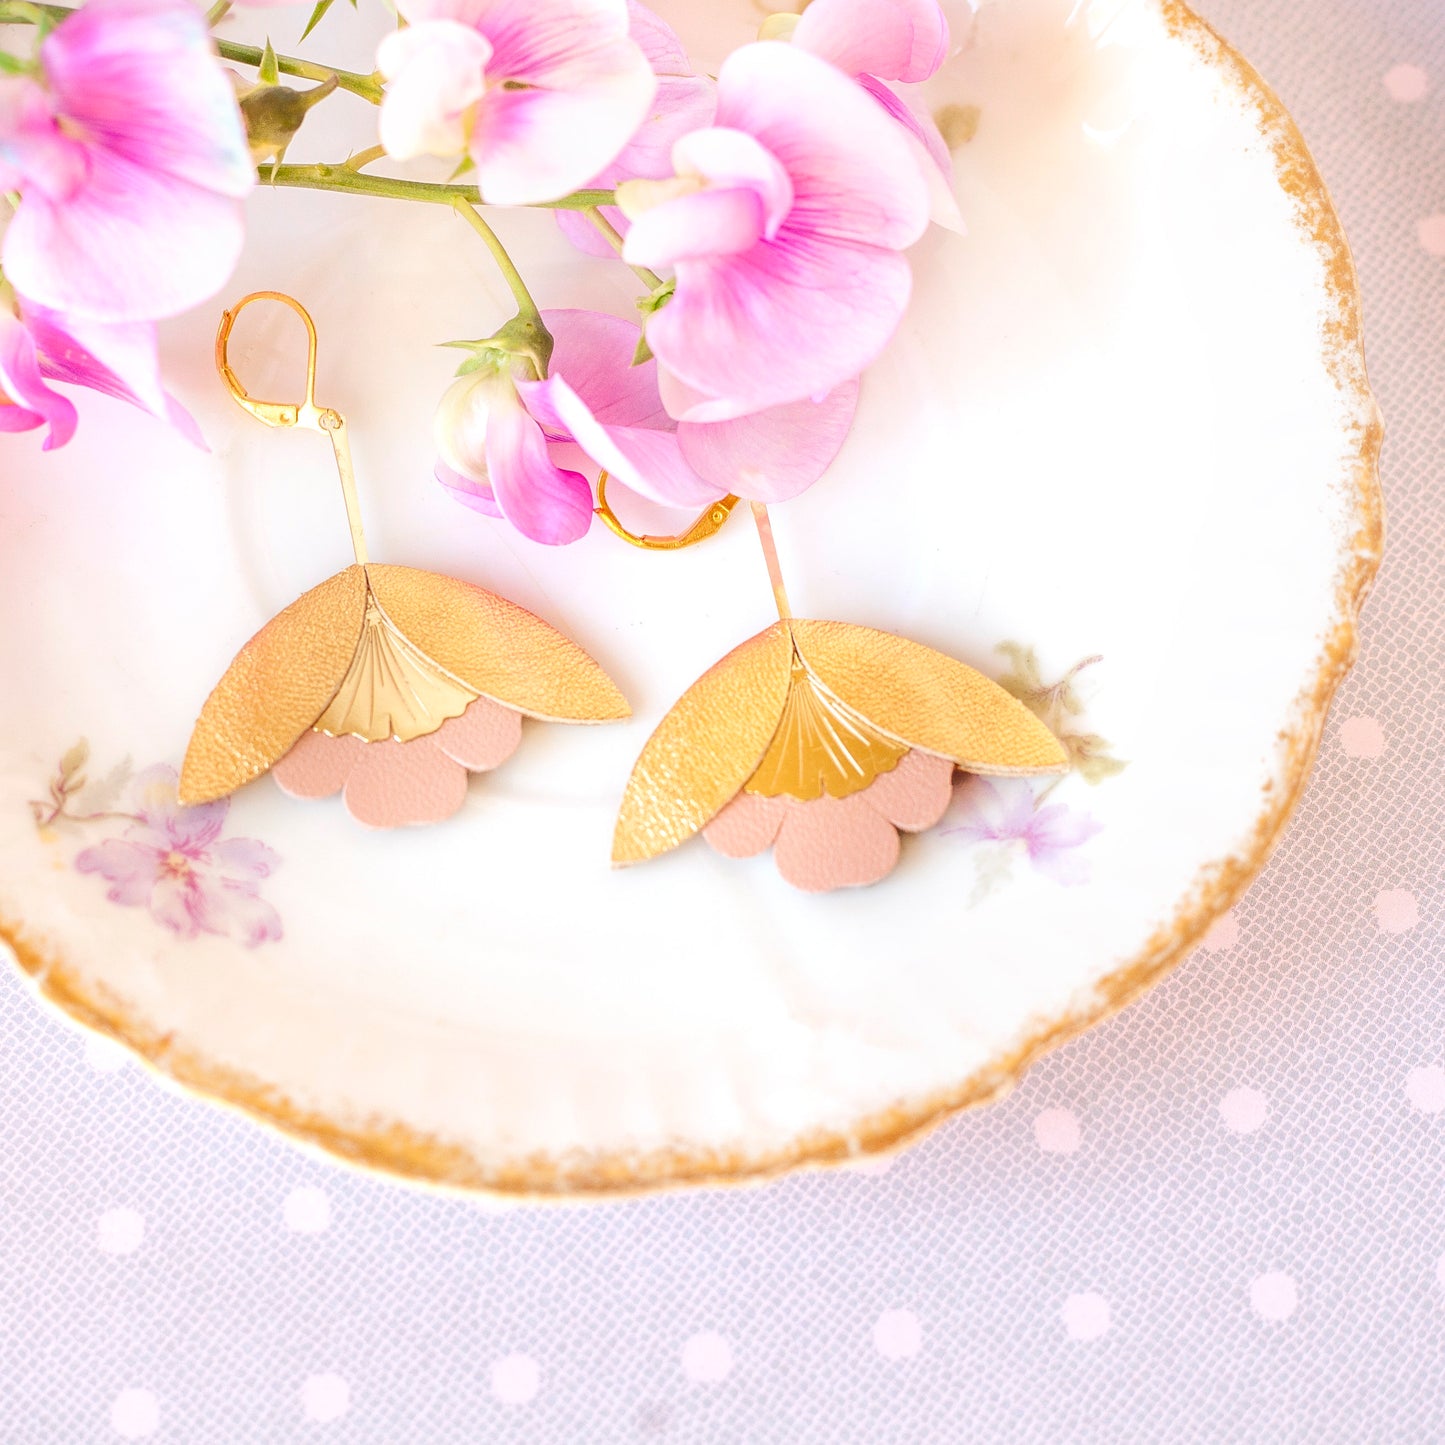 Ginkgo-Blumenohrringe aus goldenem und rosafarbenem Leder